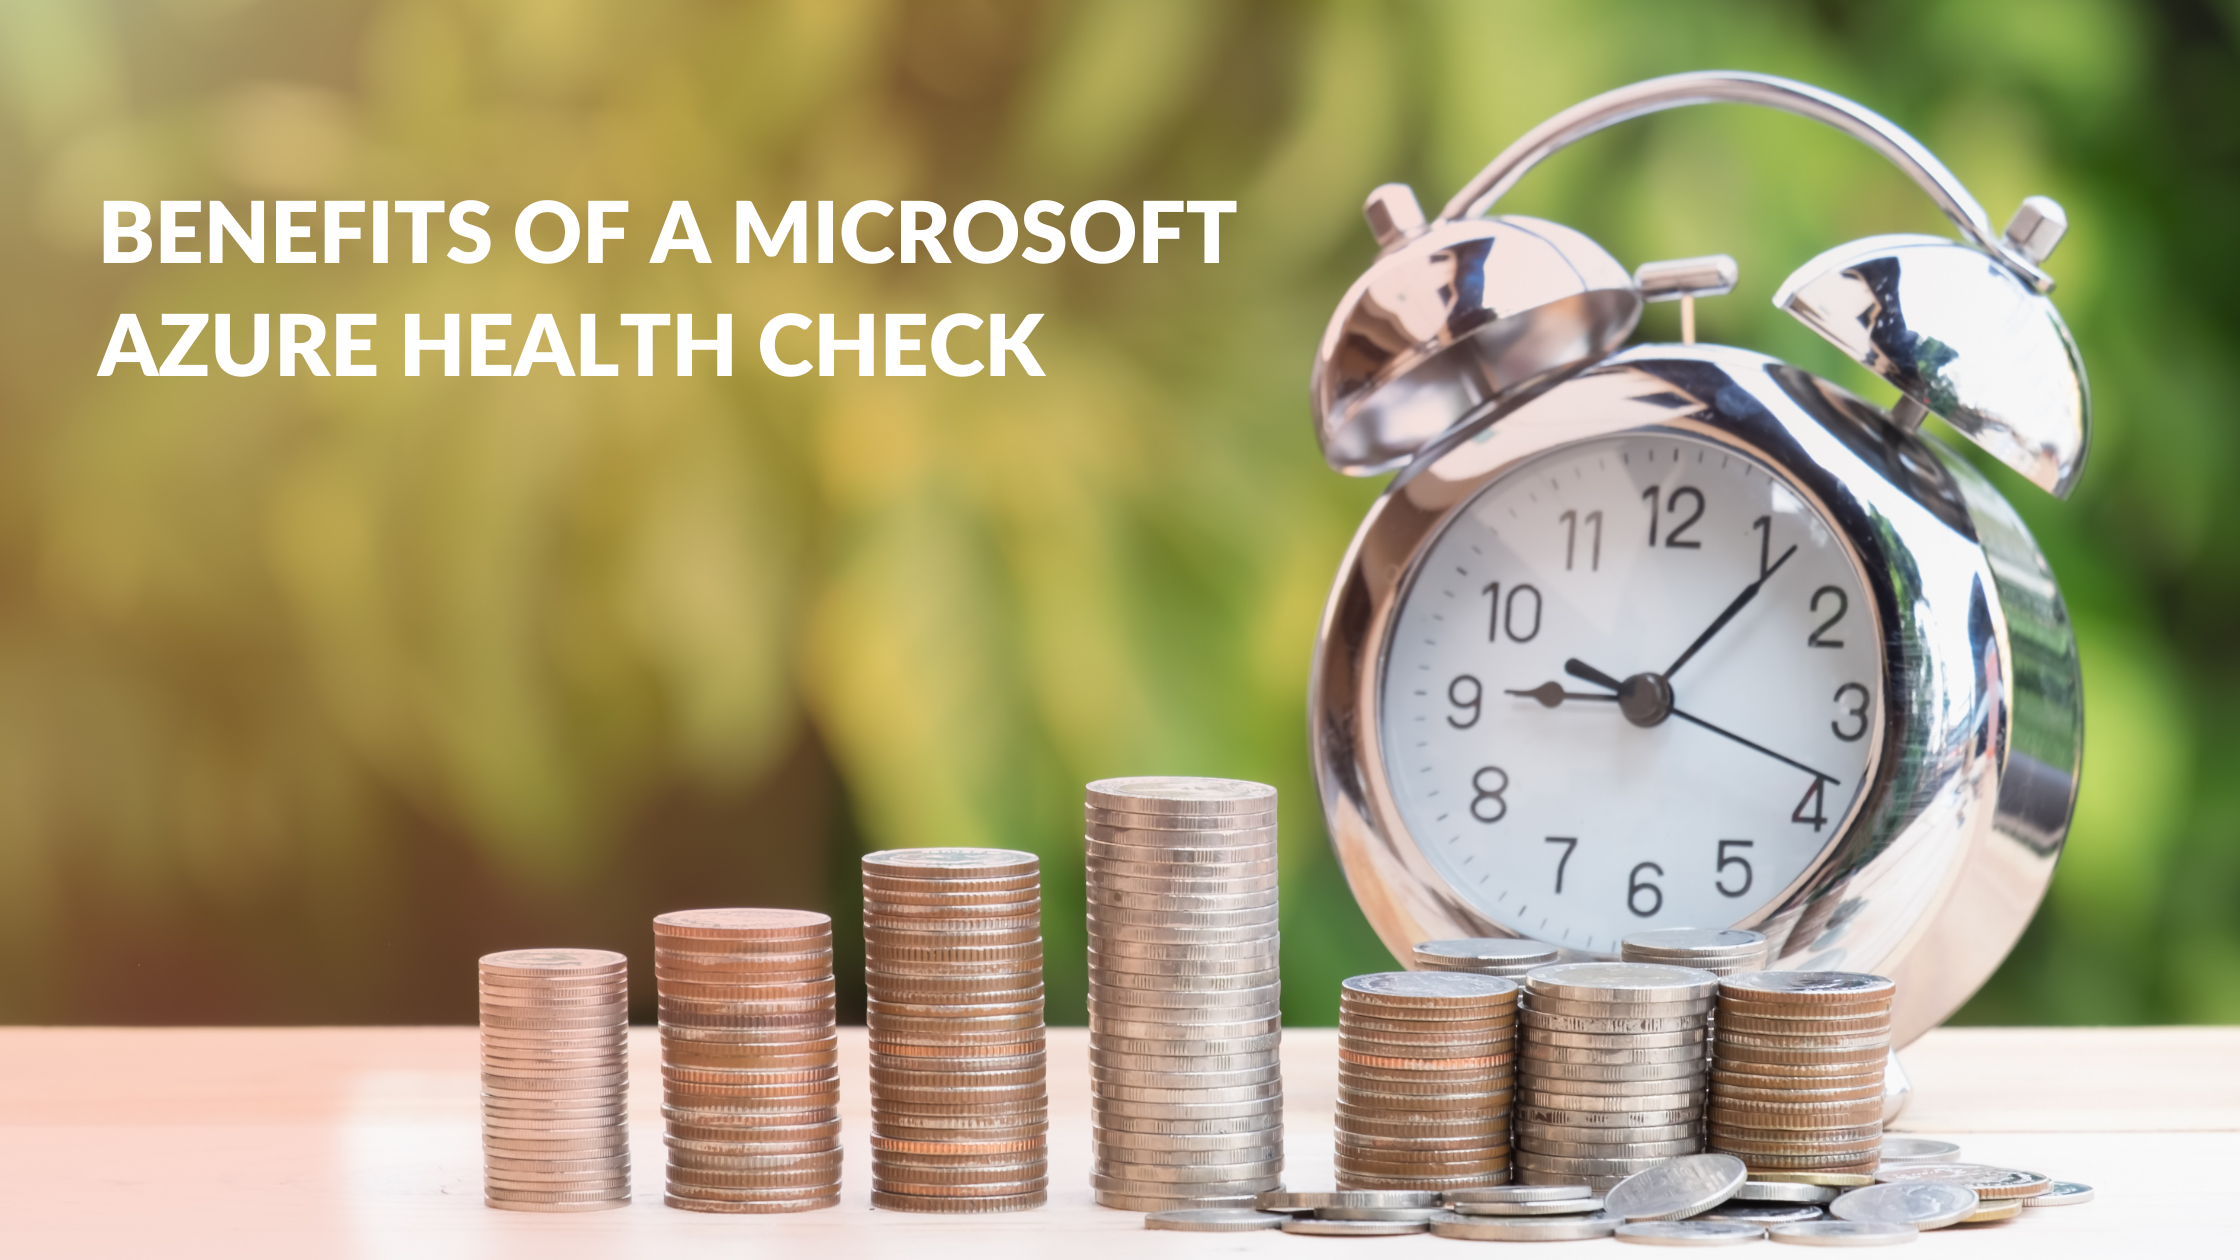 Benefits of a Microsoft Azure Health Check